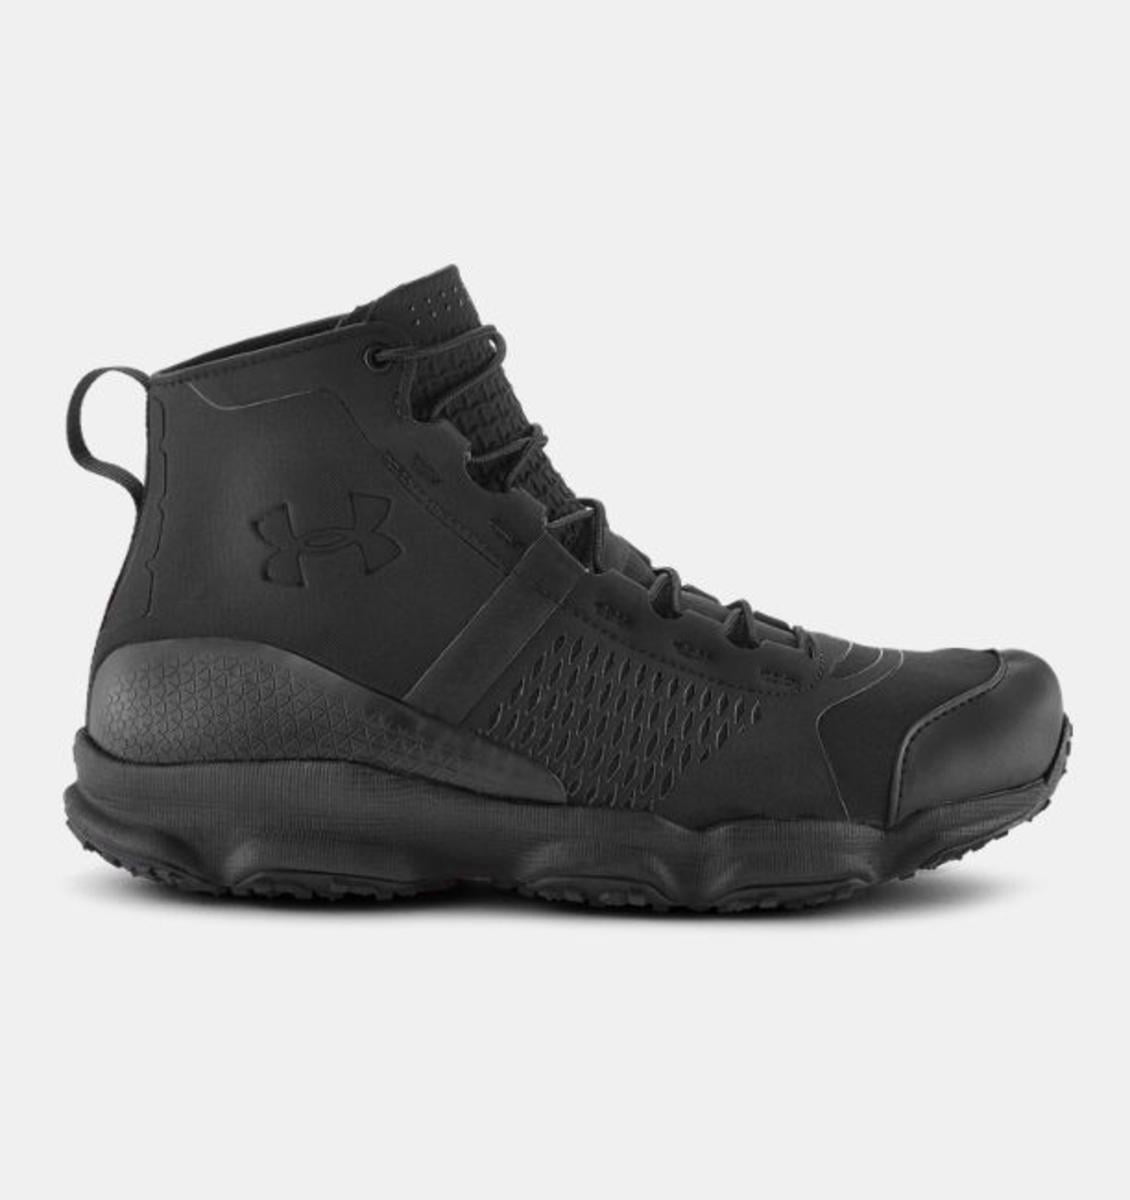 Under Armour Men's UA SpeedFit Hike Boots - Black/Black/Black 12